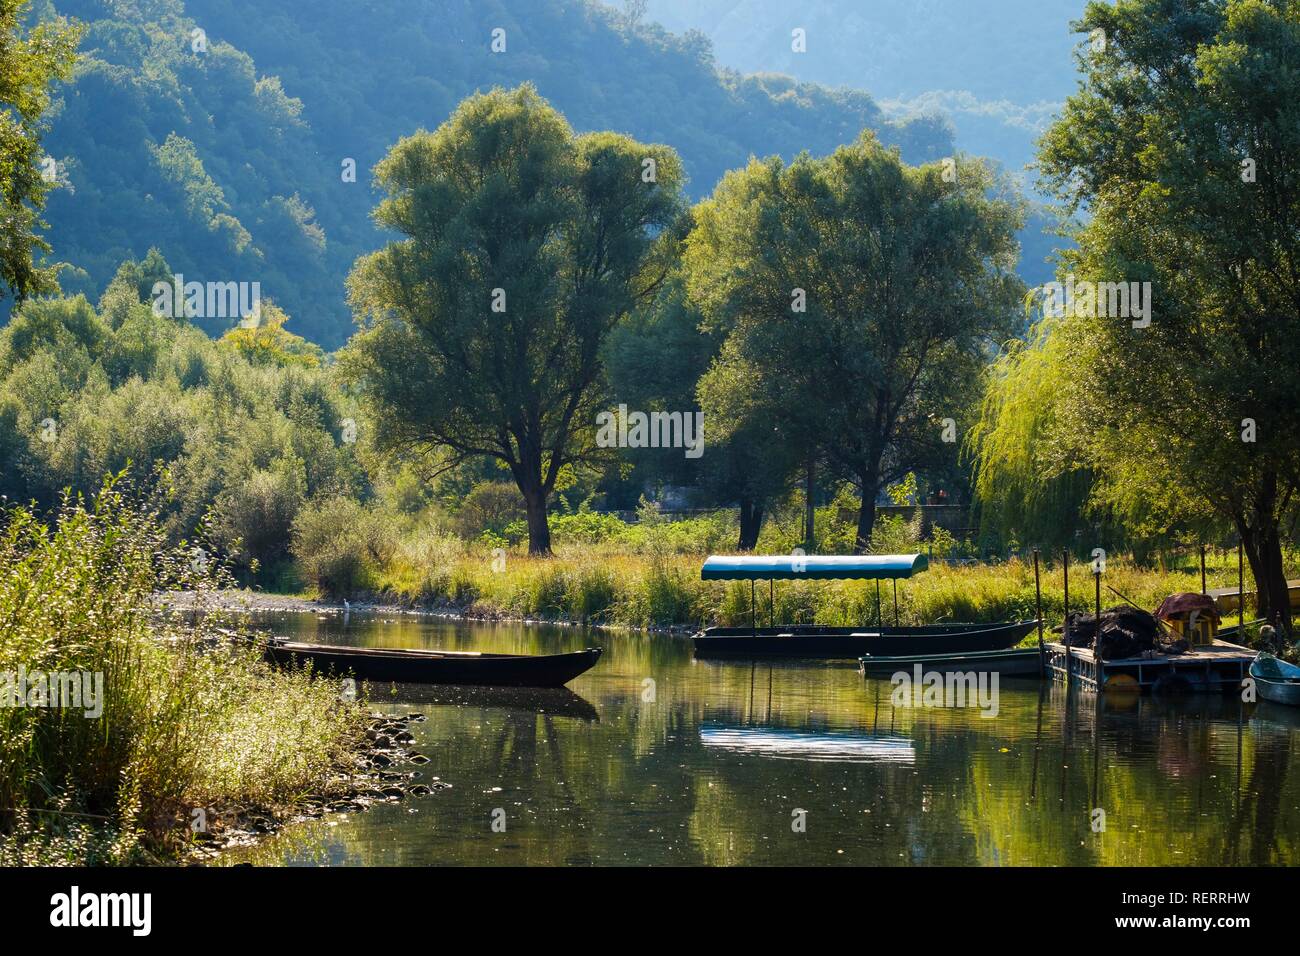 Boats on river, Rijeka Crnojevica Crnojevic, parc national du lac de Skadar, près de Cetinje, Monténégro Banque D'Images